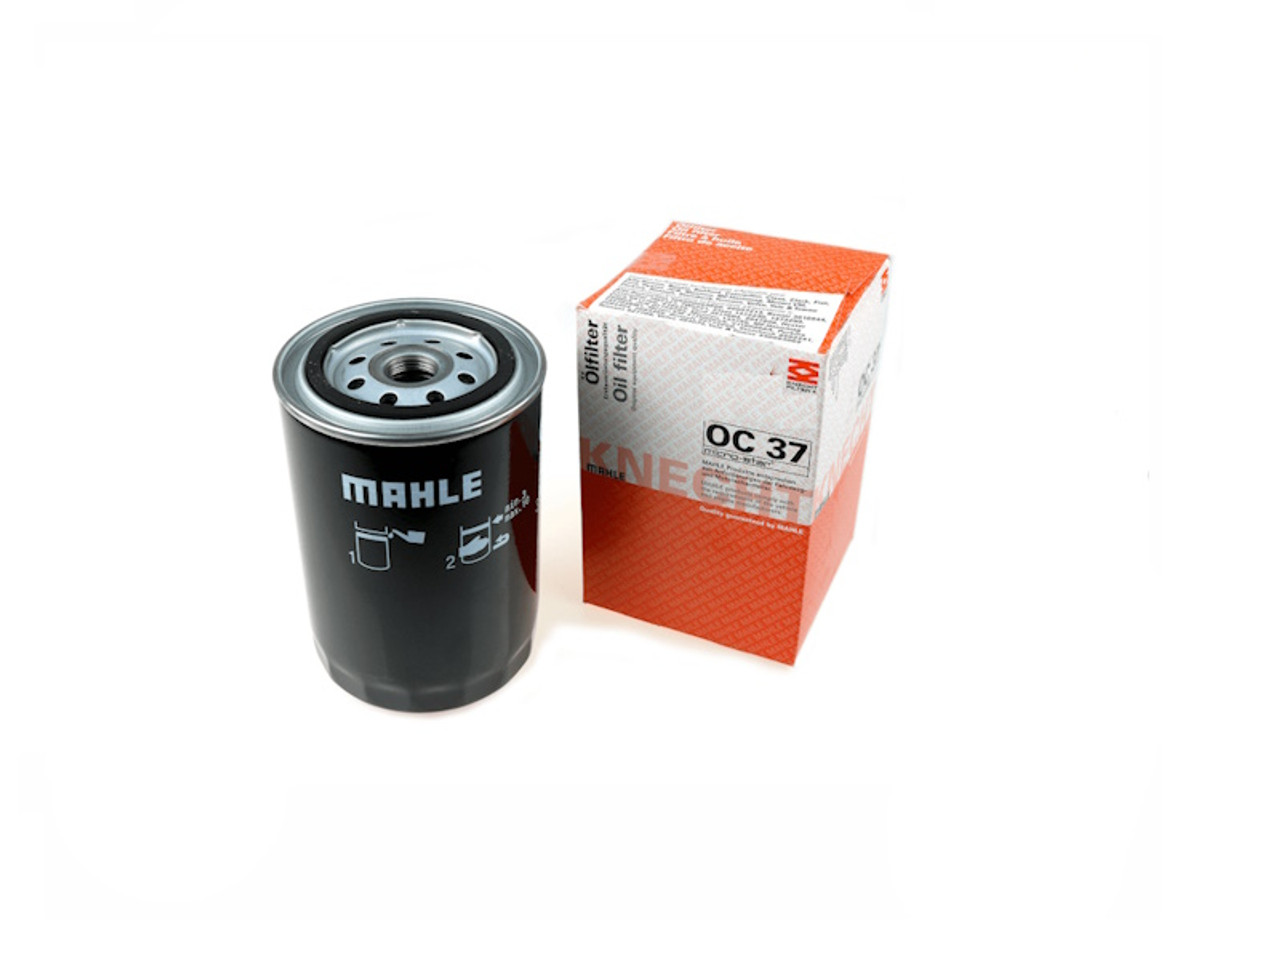 Mahle 2.5 VM Turbo Diesel Oil Filter - AEU2218L